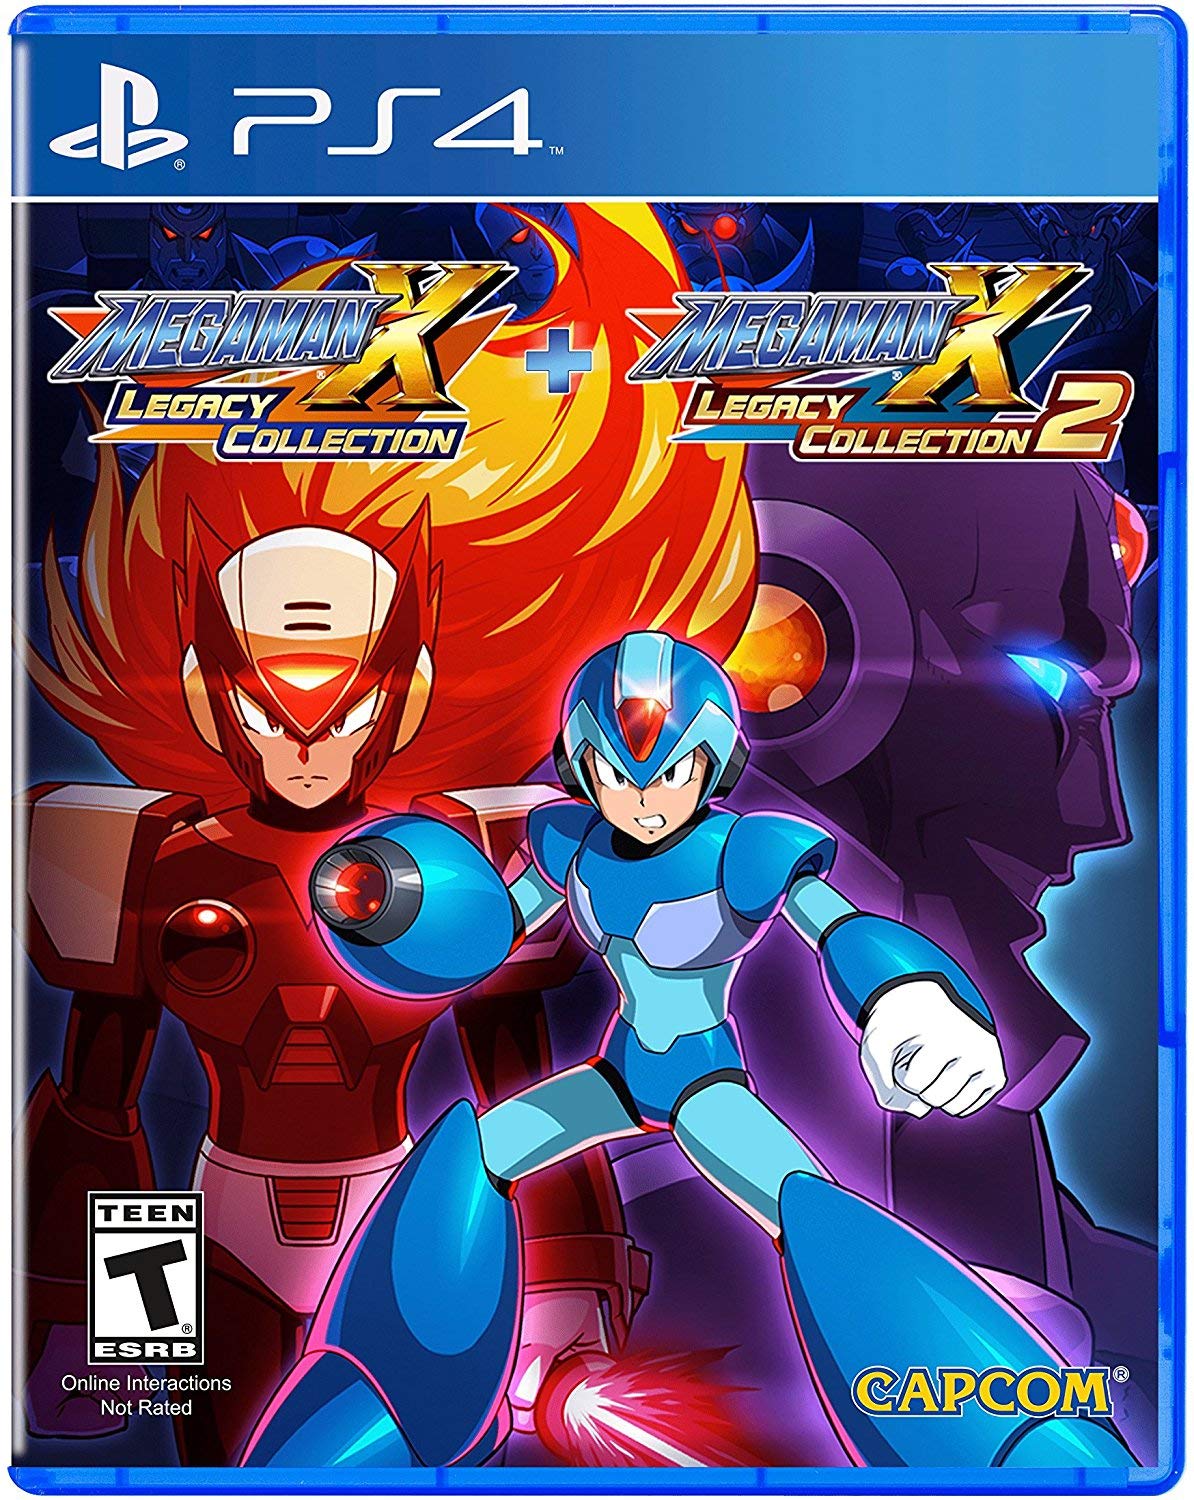 Mega Man X Legacy Collection 1+2 (USA Import) (PS4), Capcom